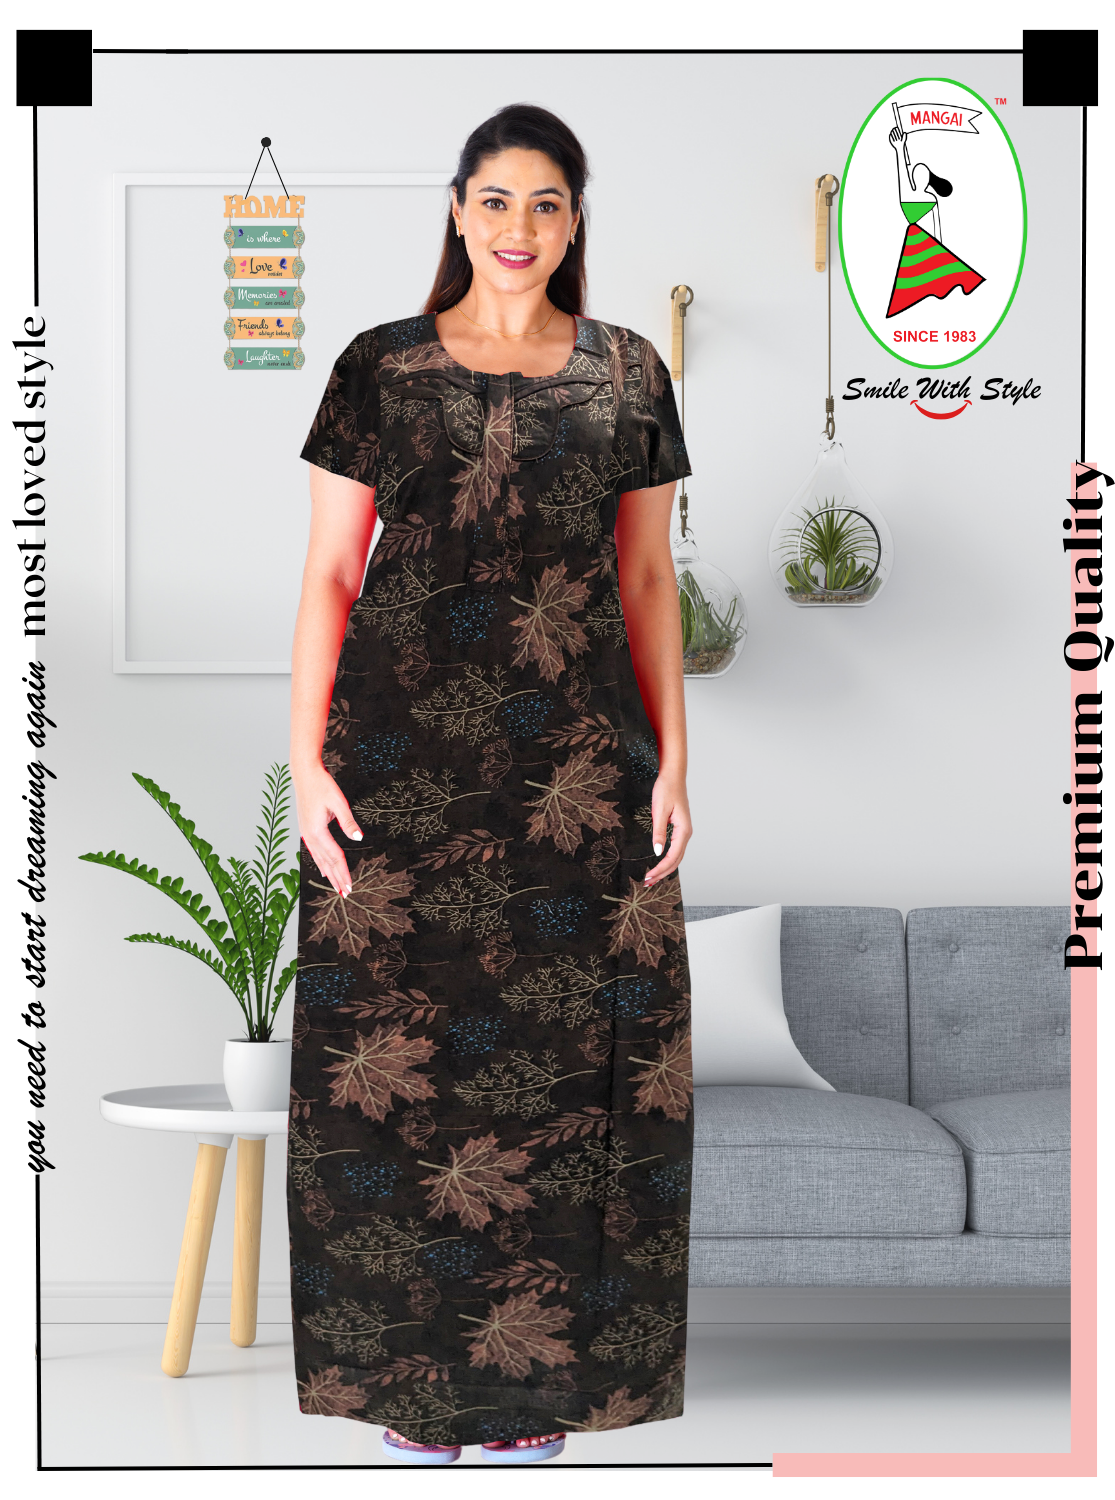 MANGAI Premium Cotton Printed Nighties- All Over Printed Stylish Nightwear for Stylish Women | Updated Design's